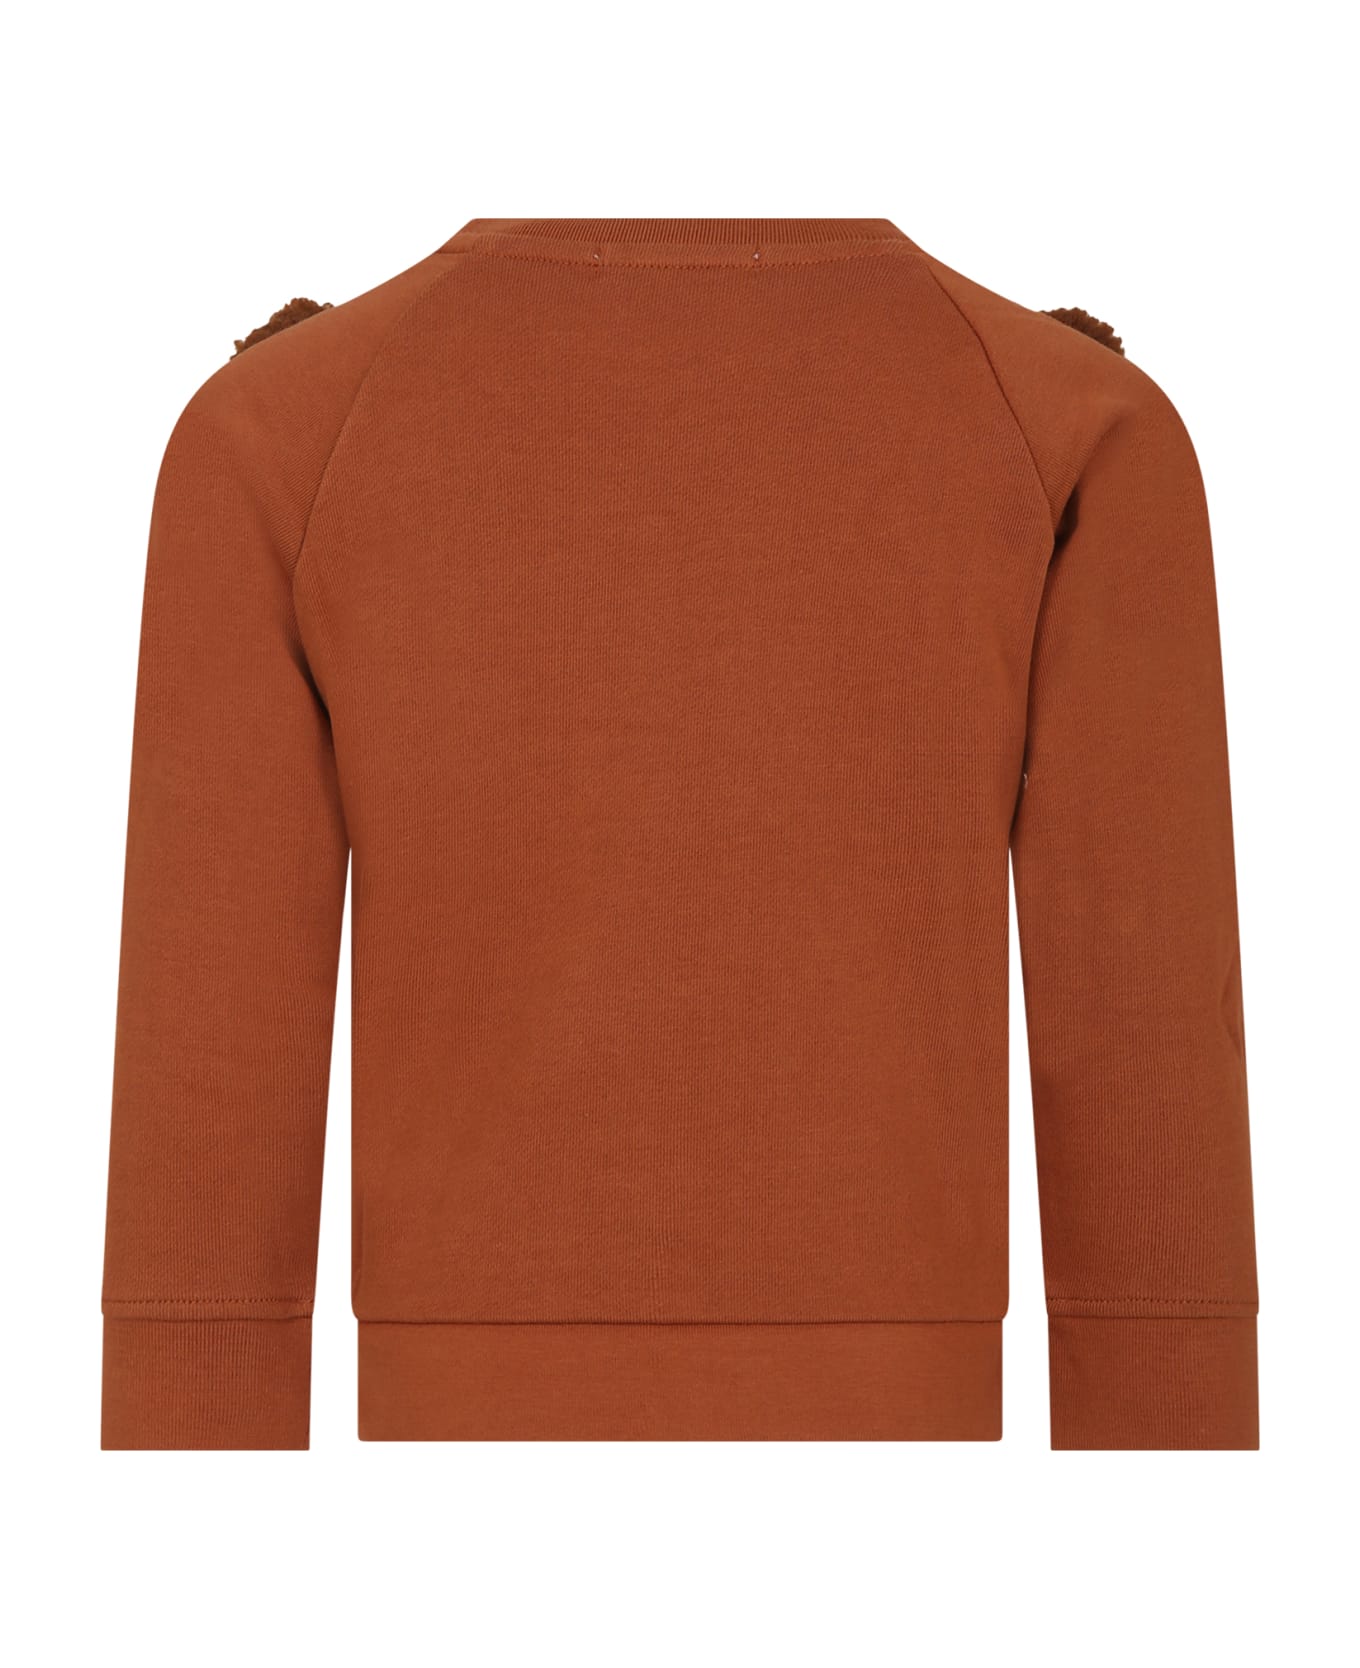 Stella McCartney Kids Brown Sweatshirt For Boy With Bear - Brown ニットウェア＆スウェットシャツ